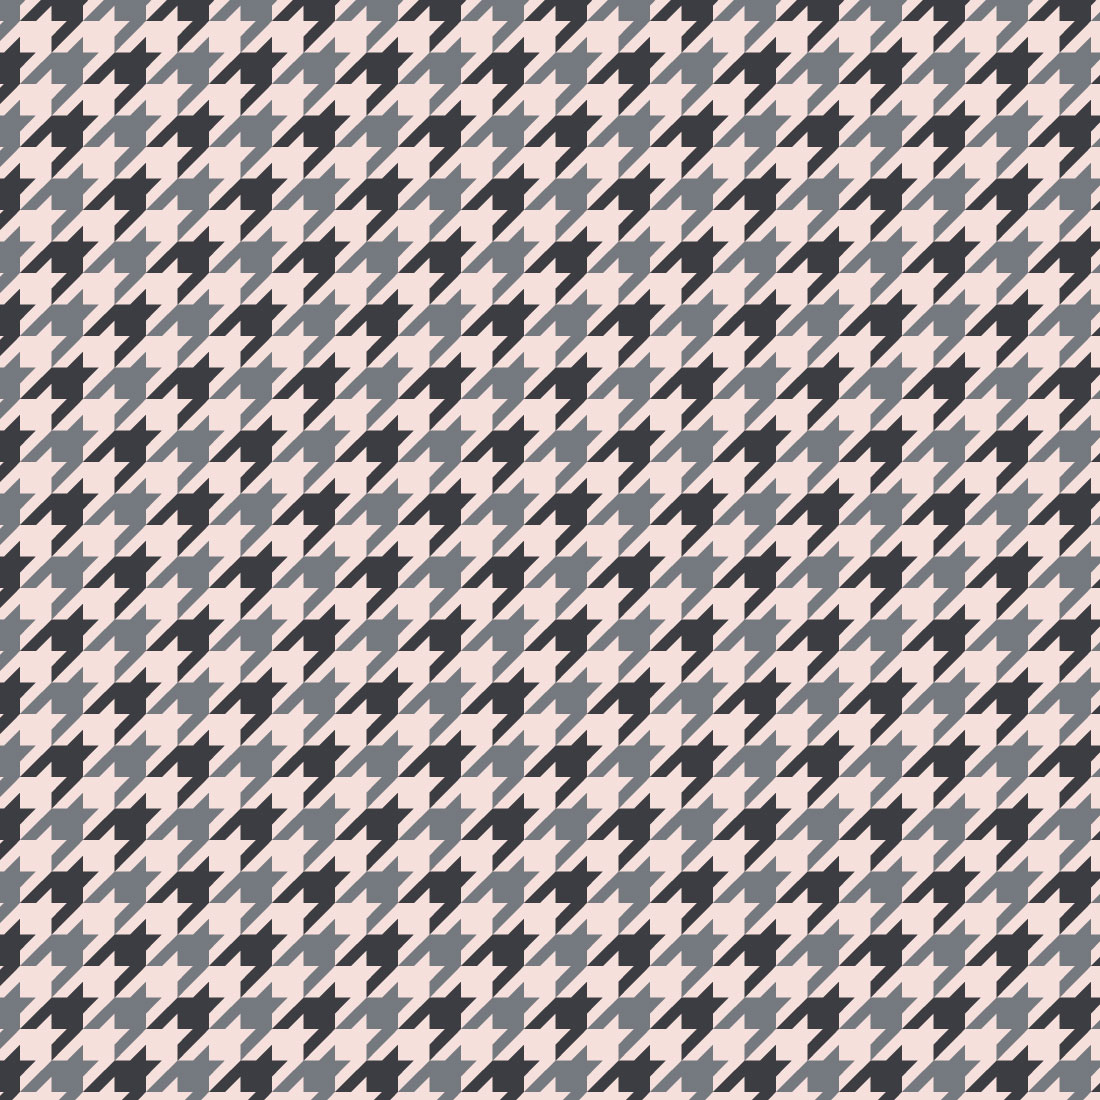 plaid patterns 13 876